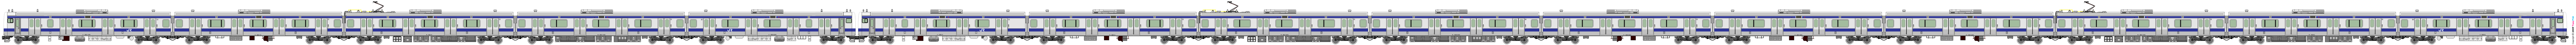 5008 - [5008] East Japan Railway 52163097210_908f4570f9_o